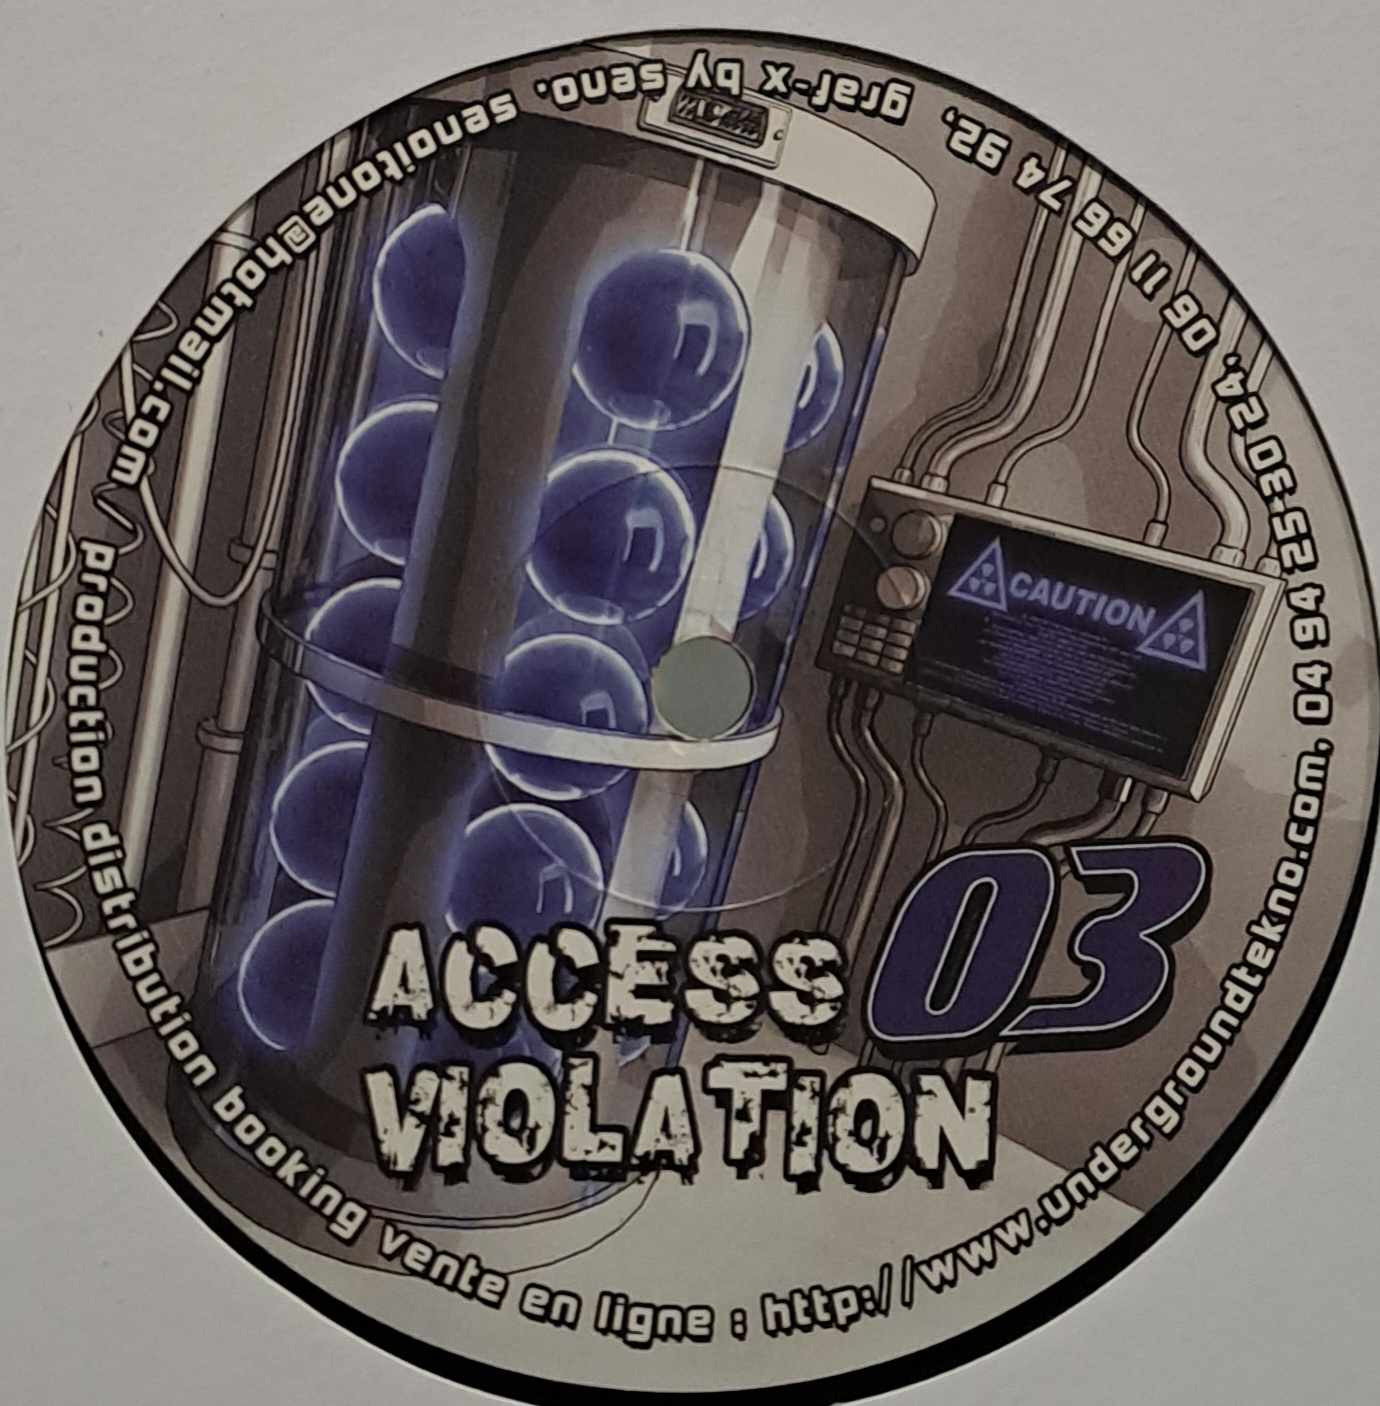 Access Violation 03 - vinyle freetekno